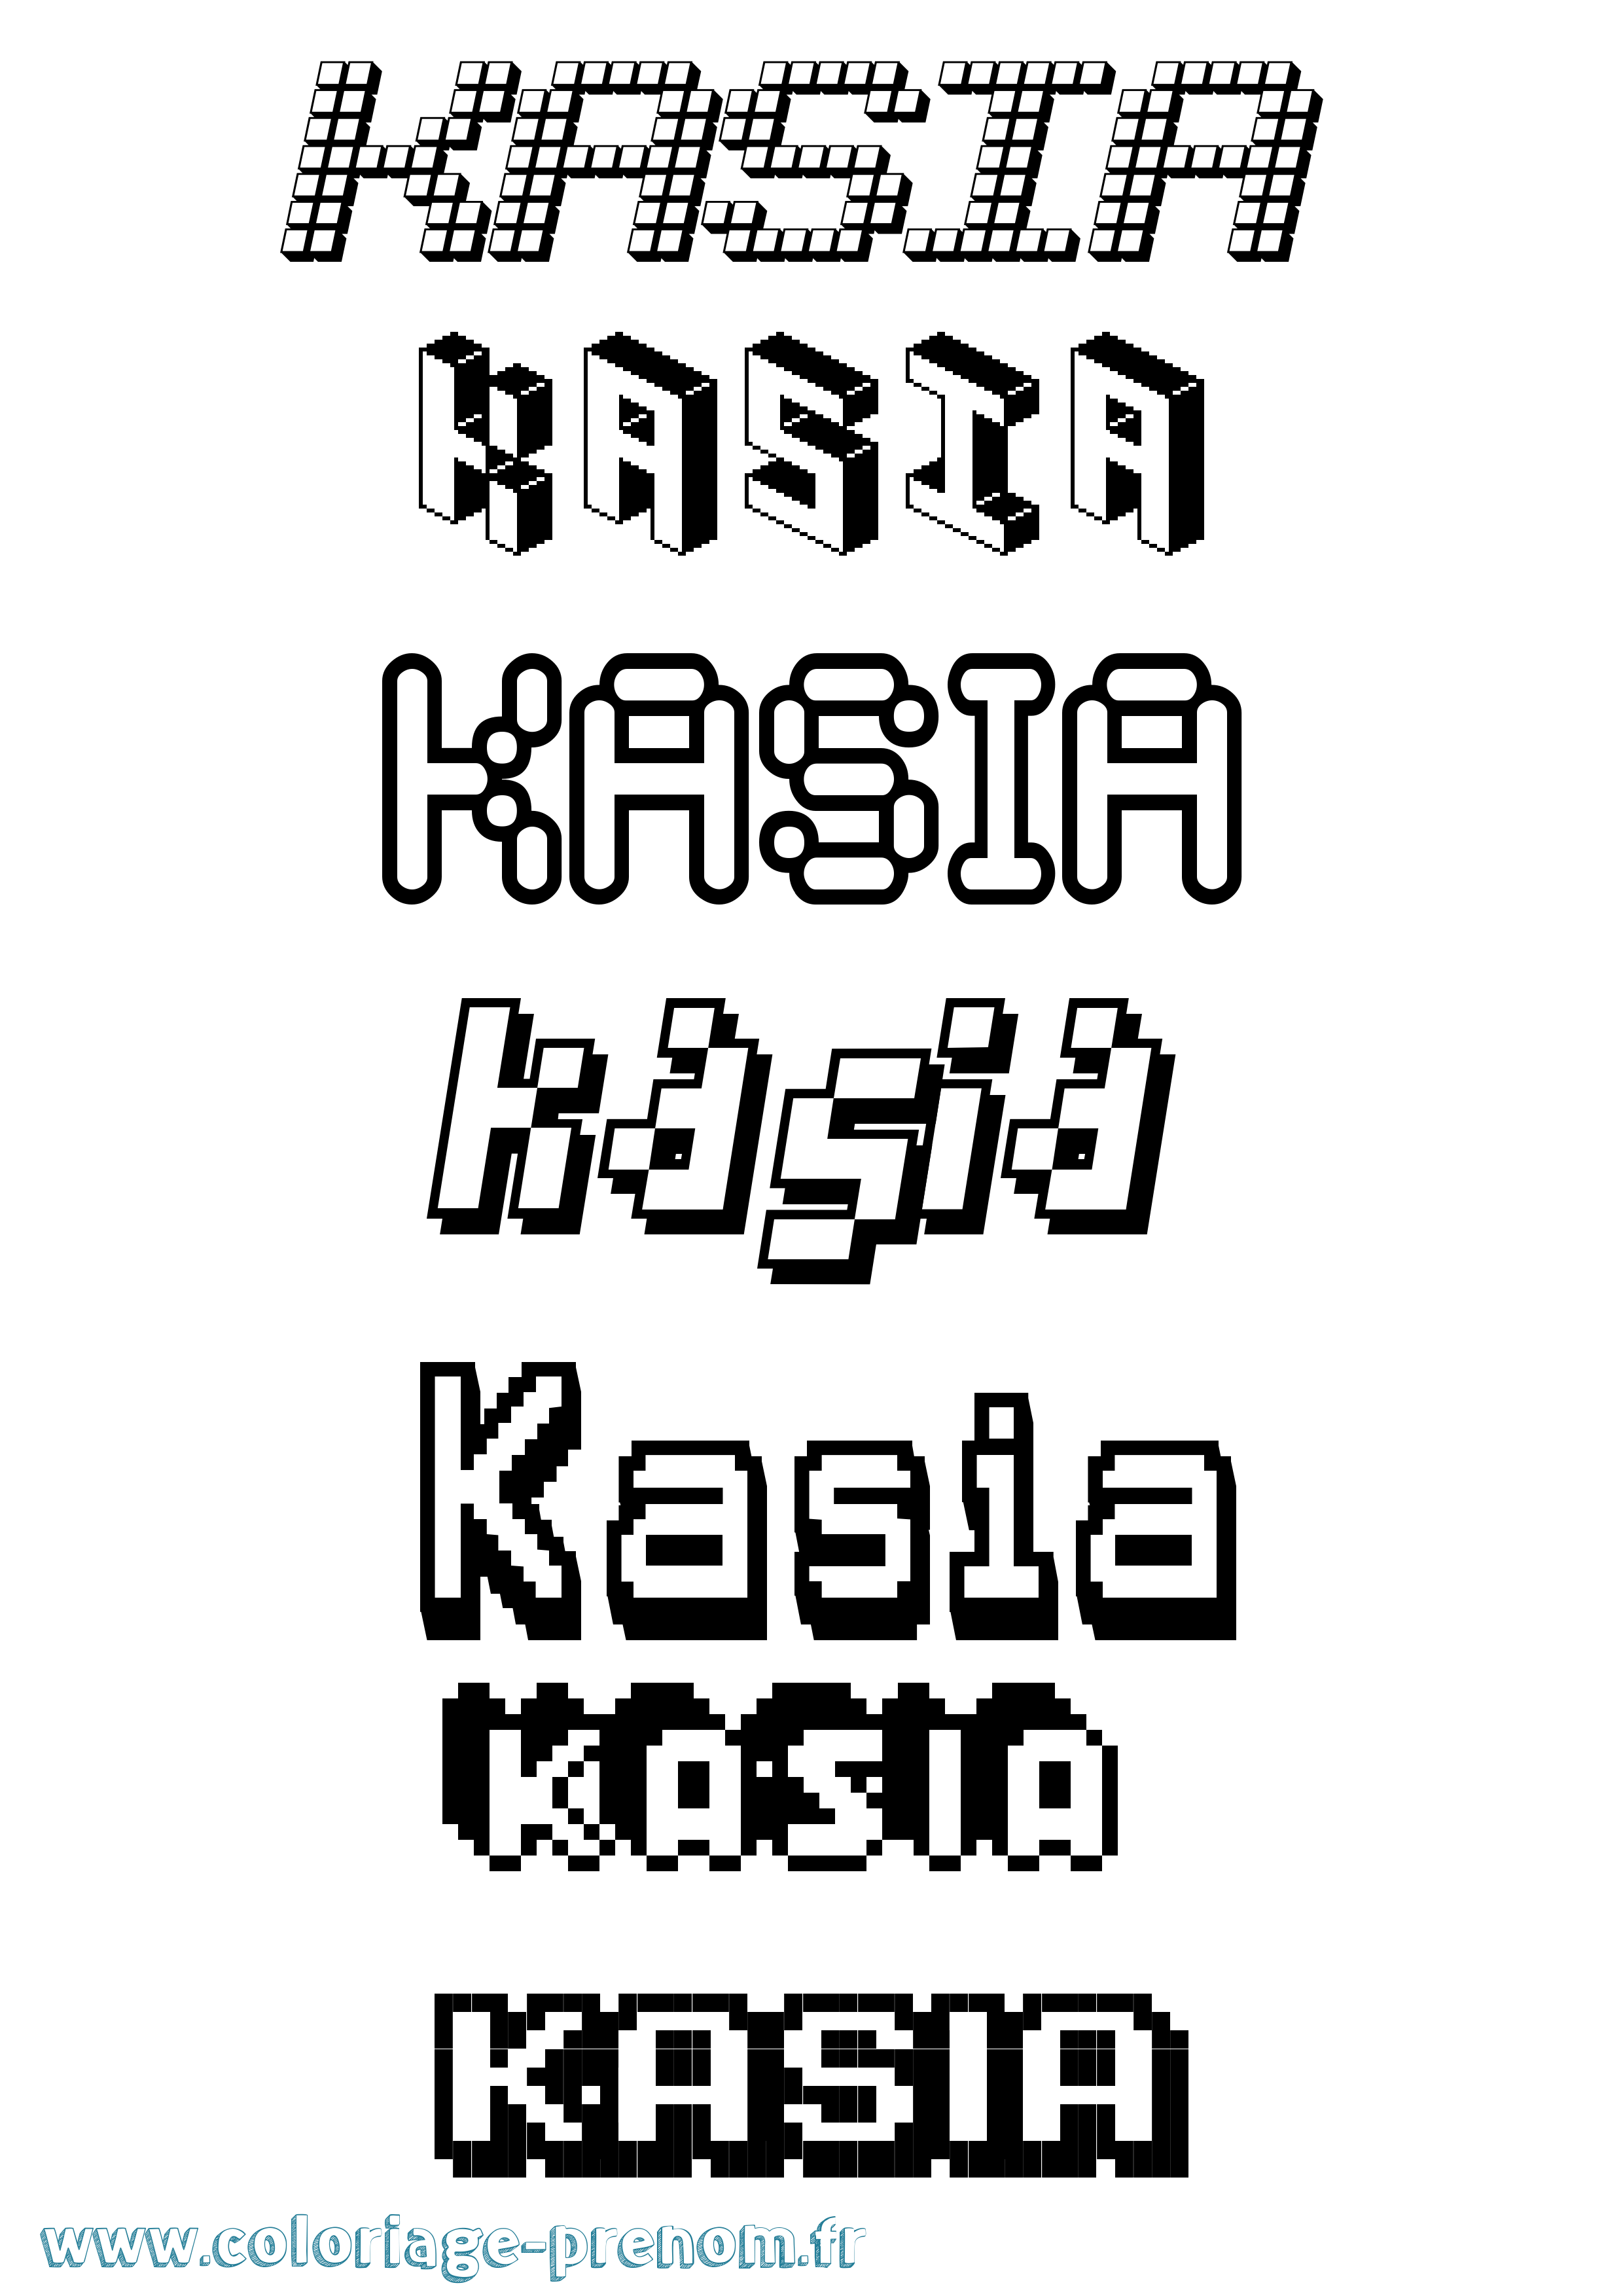 Coloriage prénom Kasia Pixel